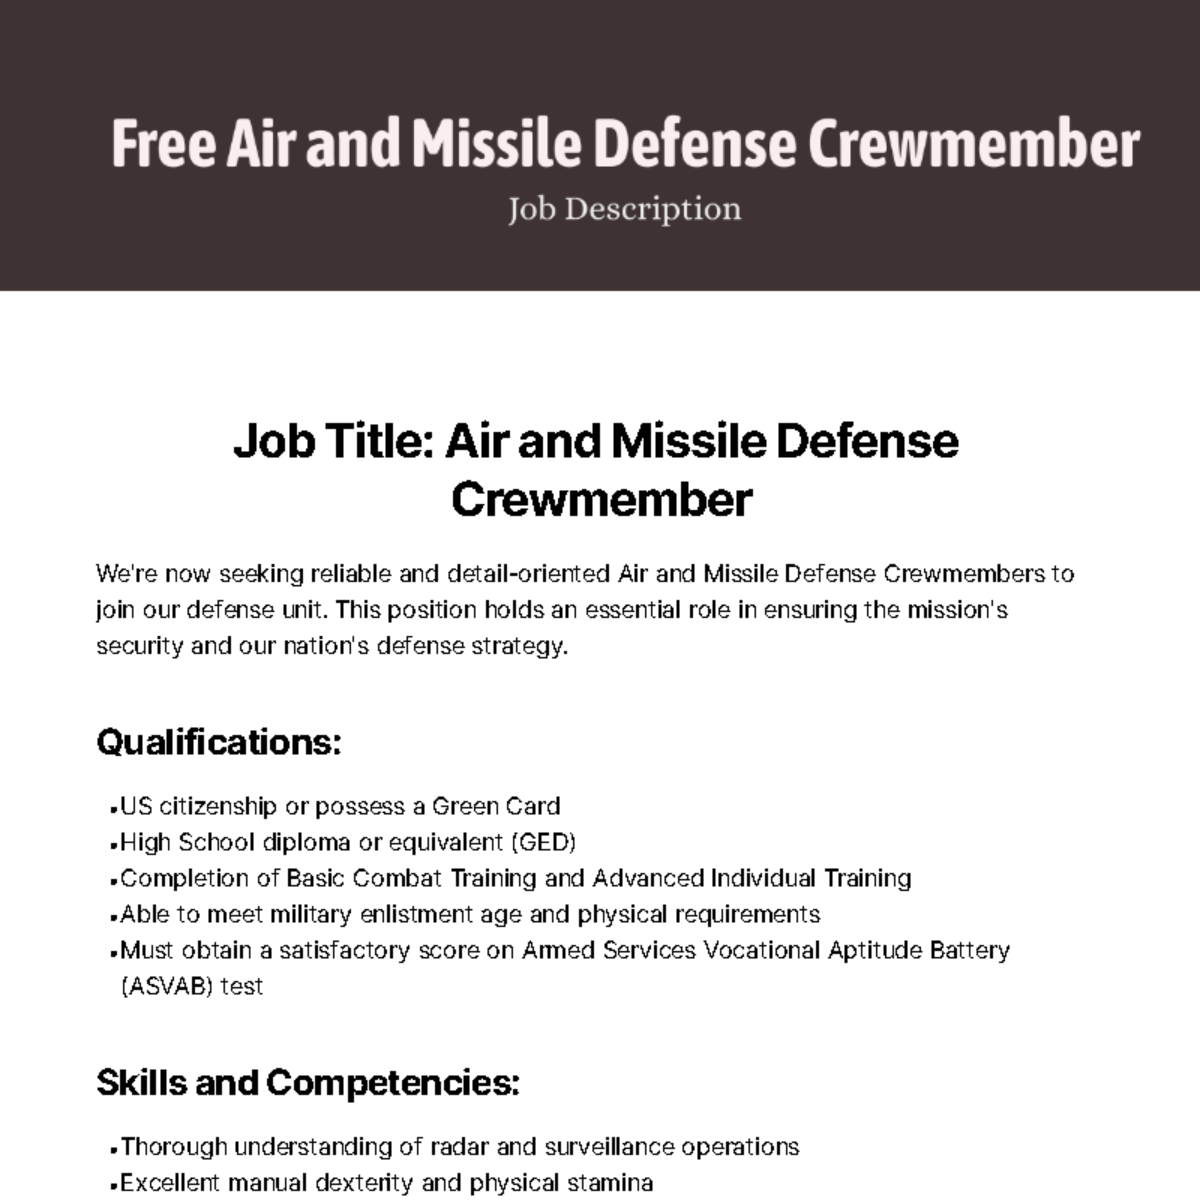 Air and Missile Defense Crewmember Job Description Template